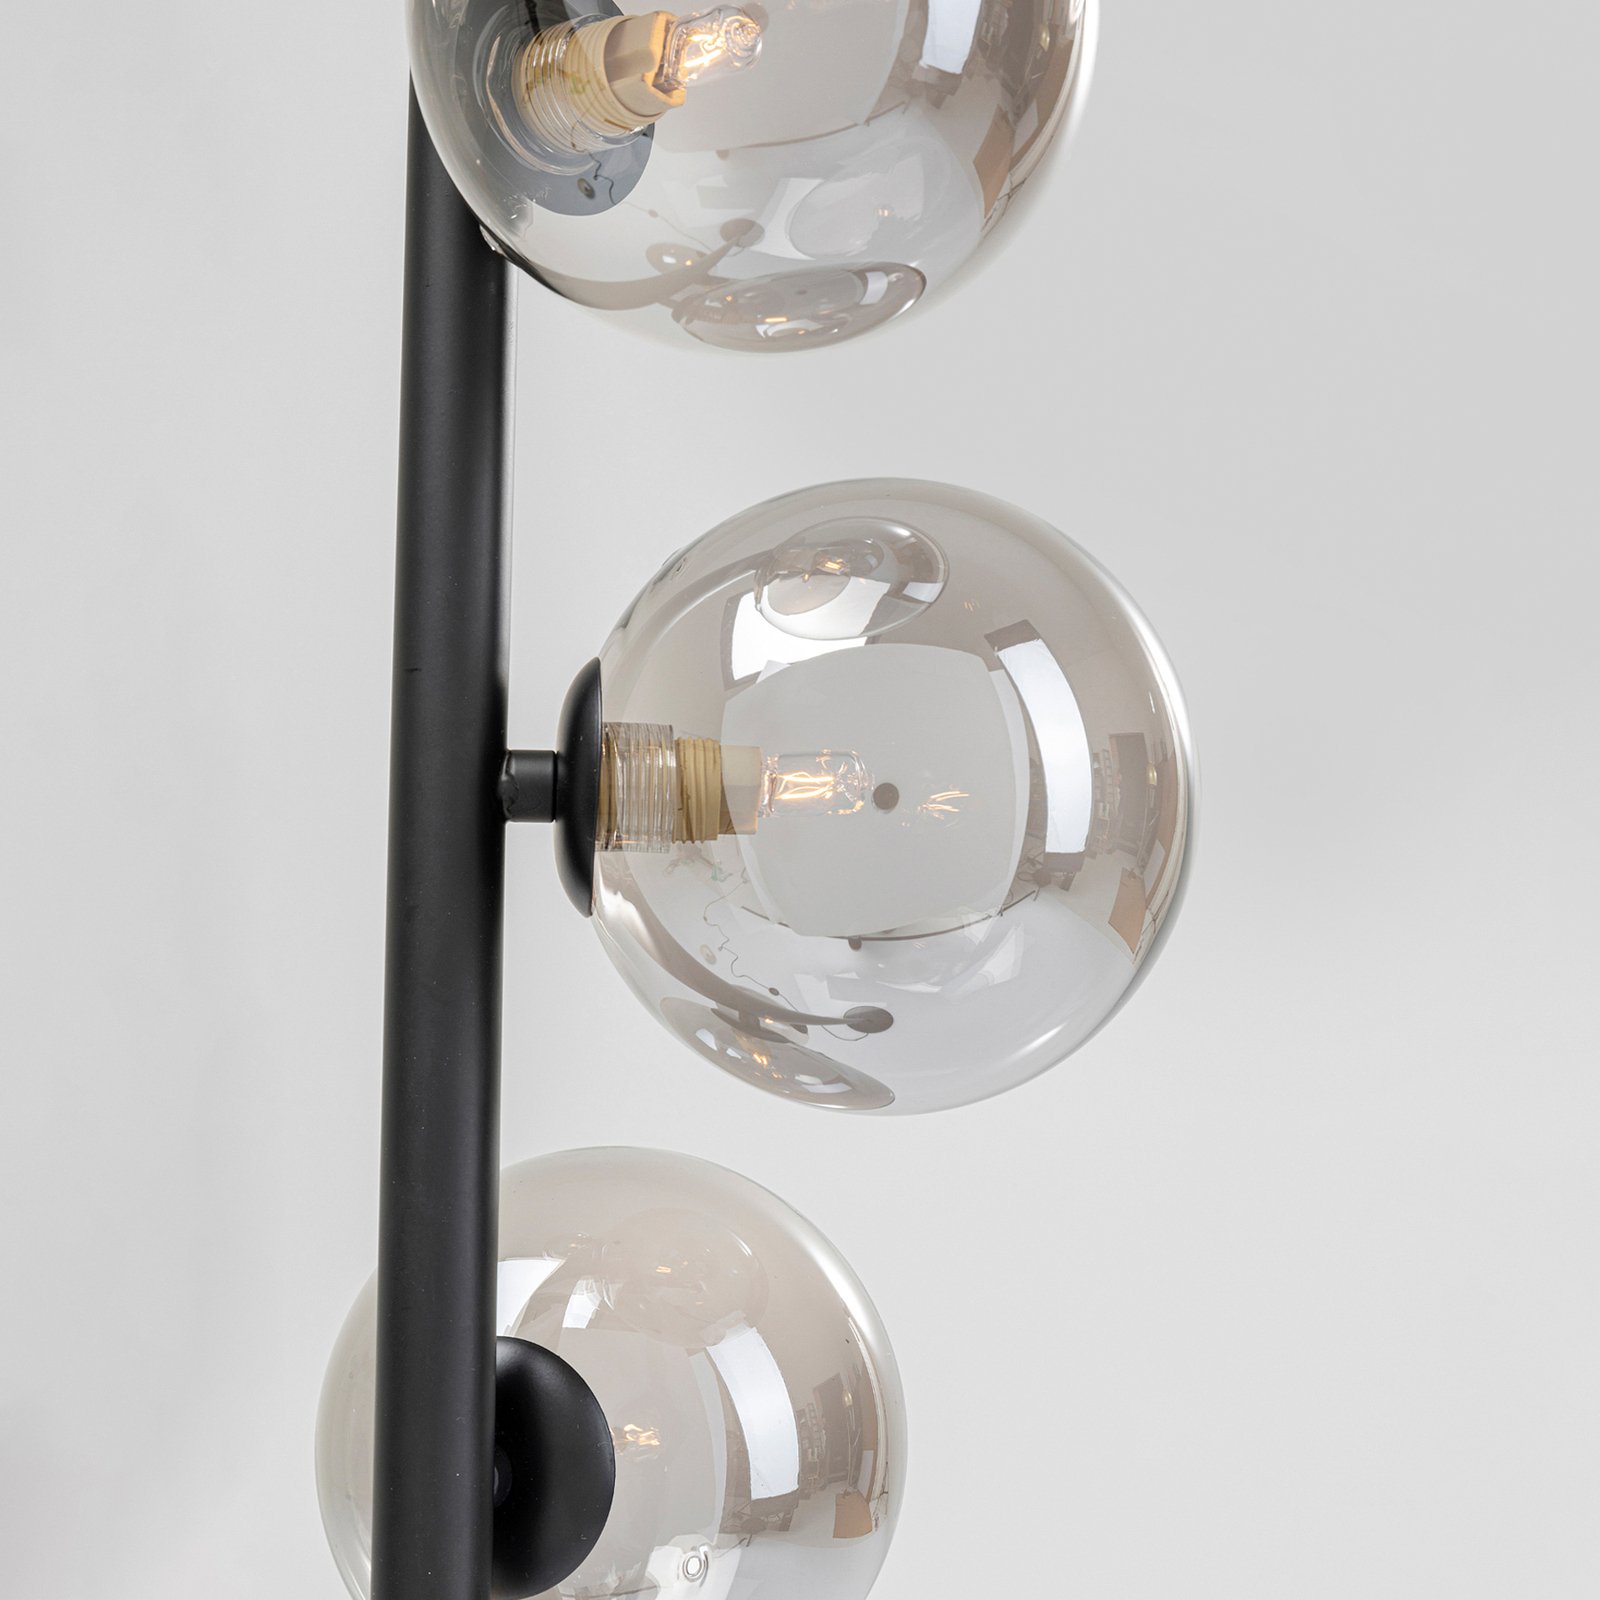 KARE Scala Balls floor lamp, 6-bulb, marble base, grey